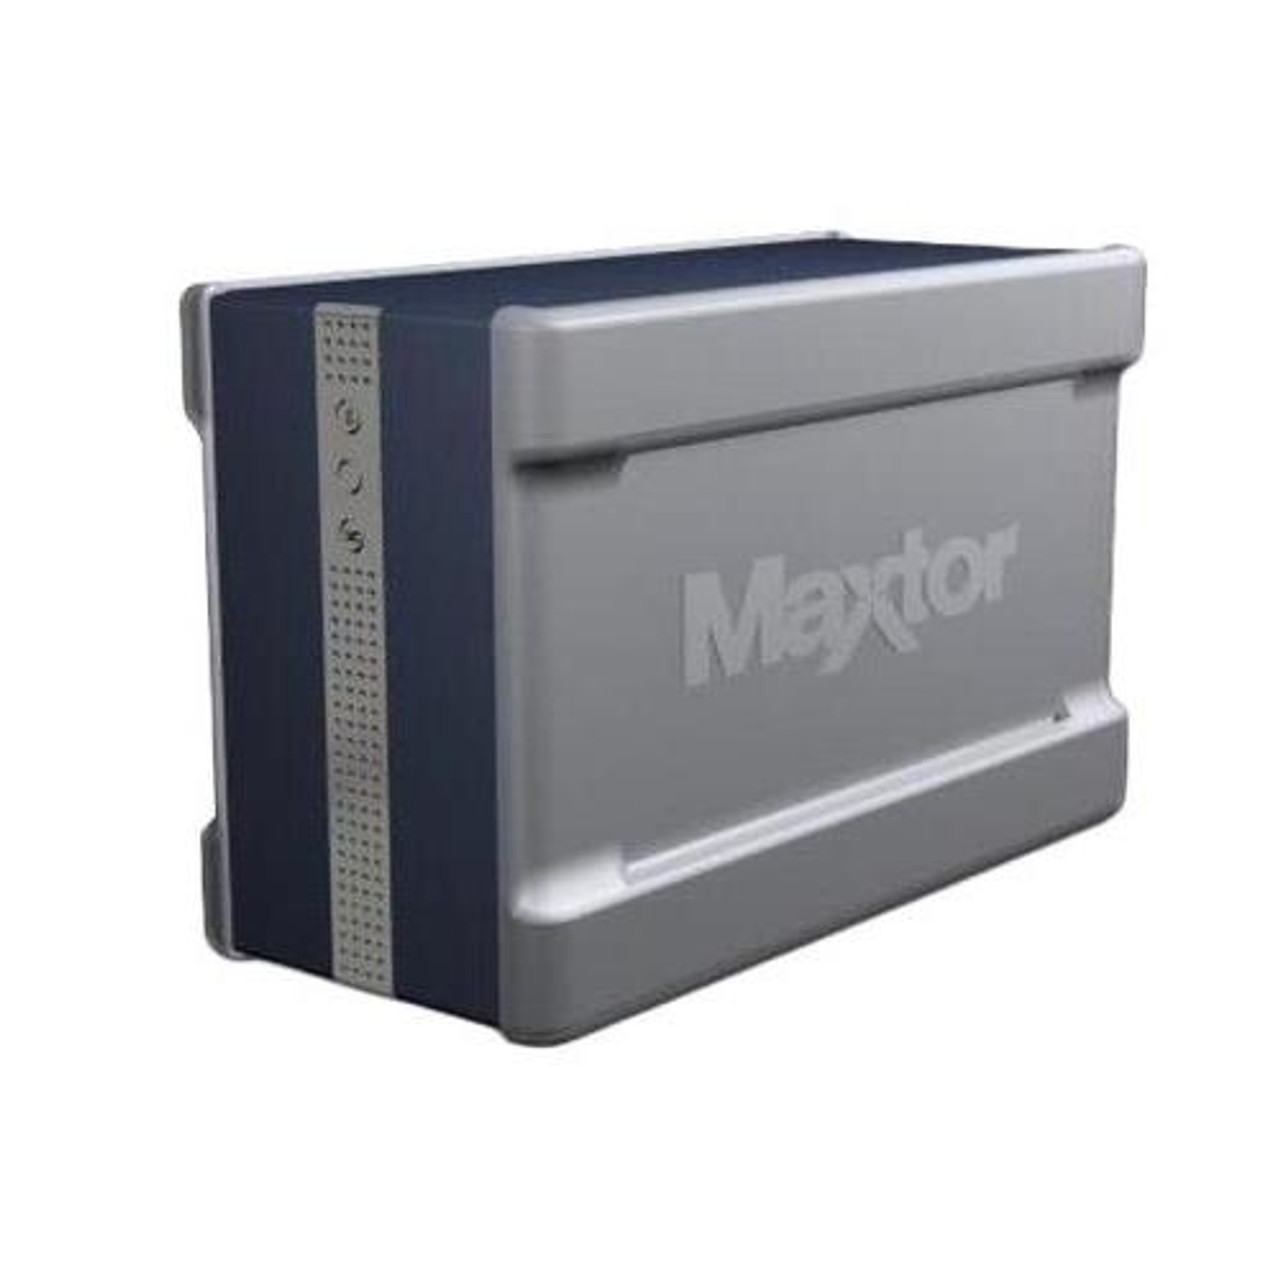 H01R300 Maxtor Shared Storage